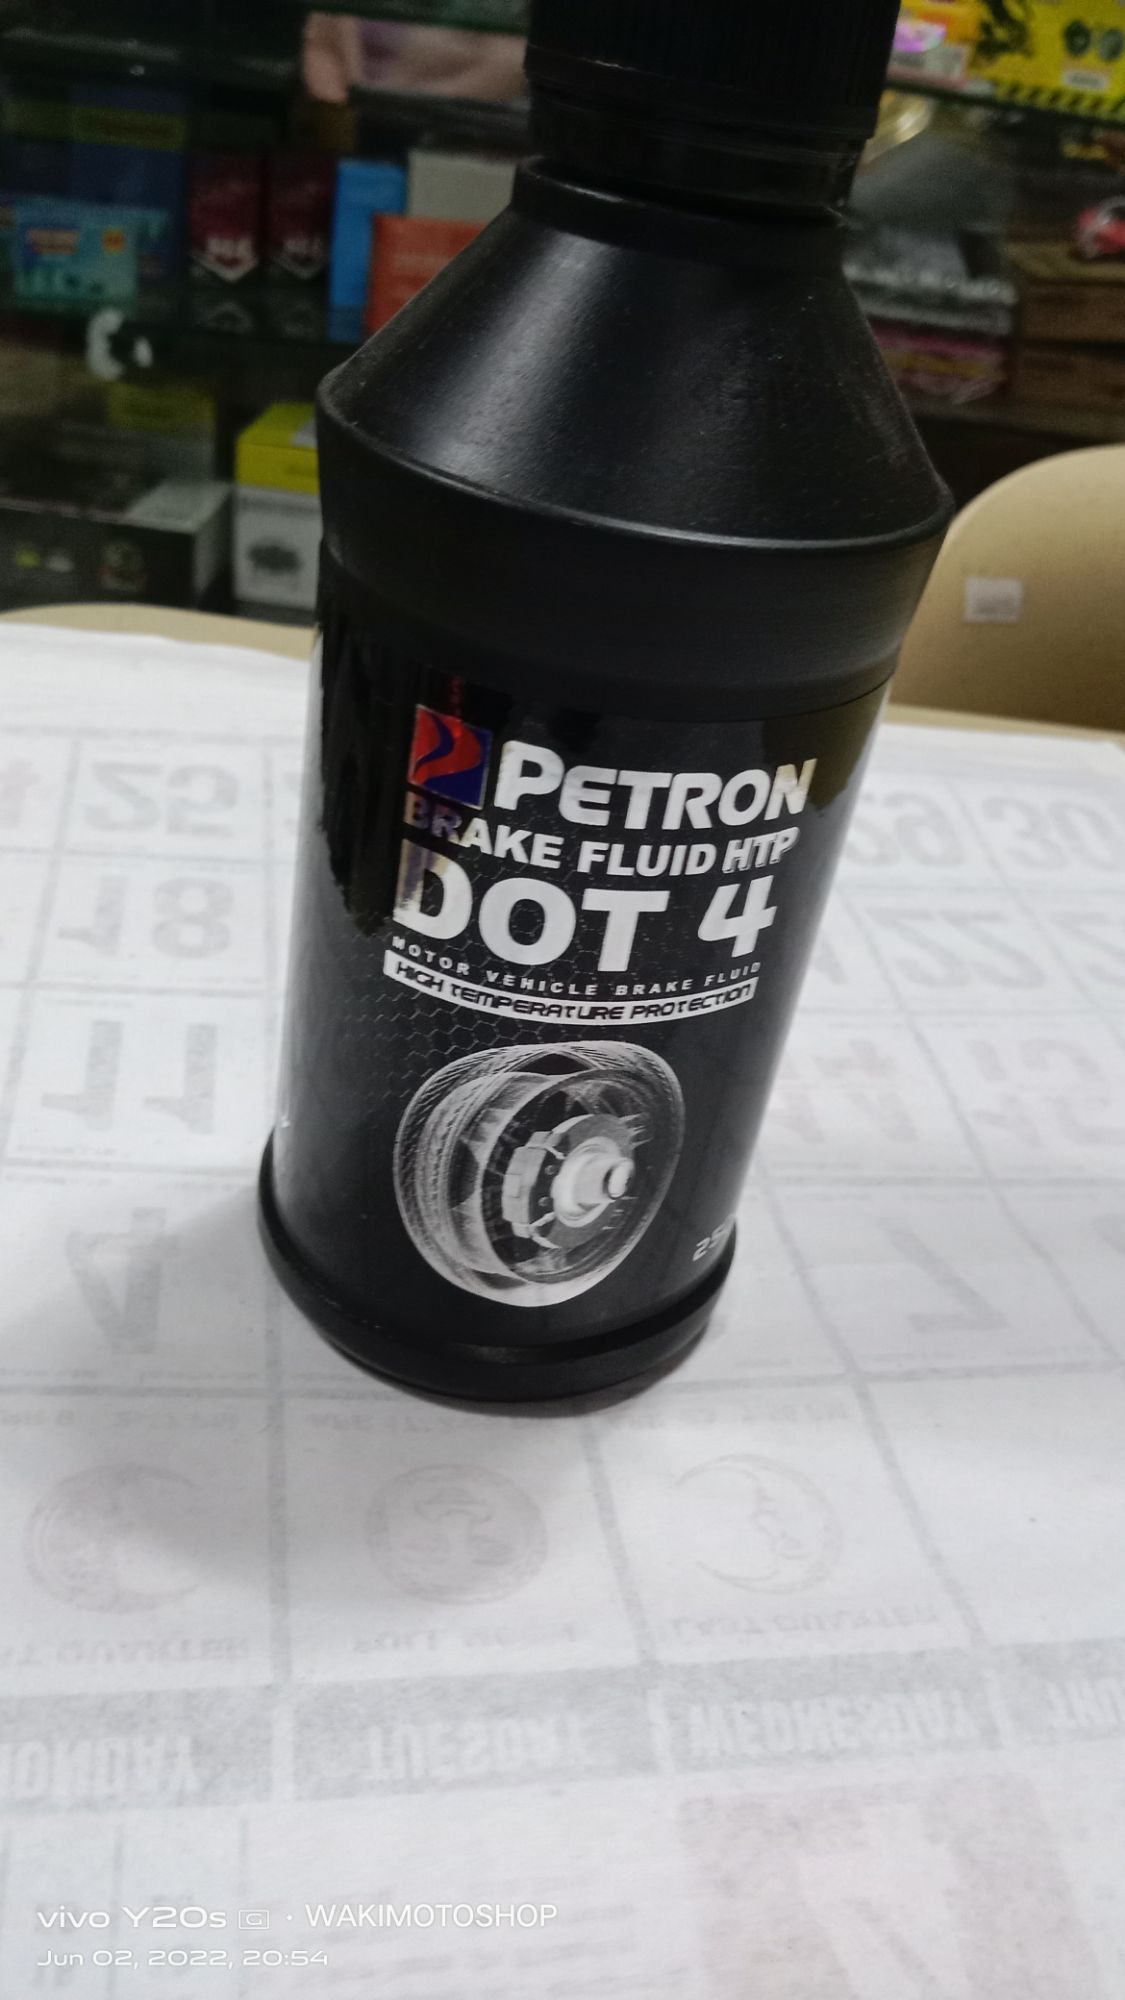 BRAKE FLUID HTP DOT-4 - Petron